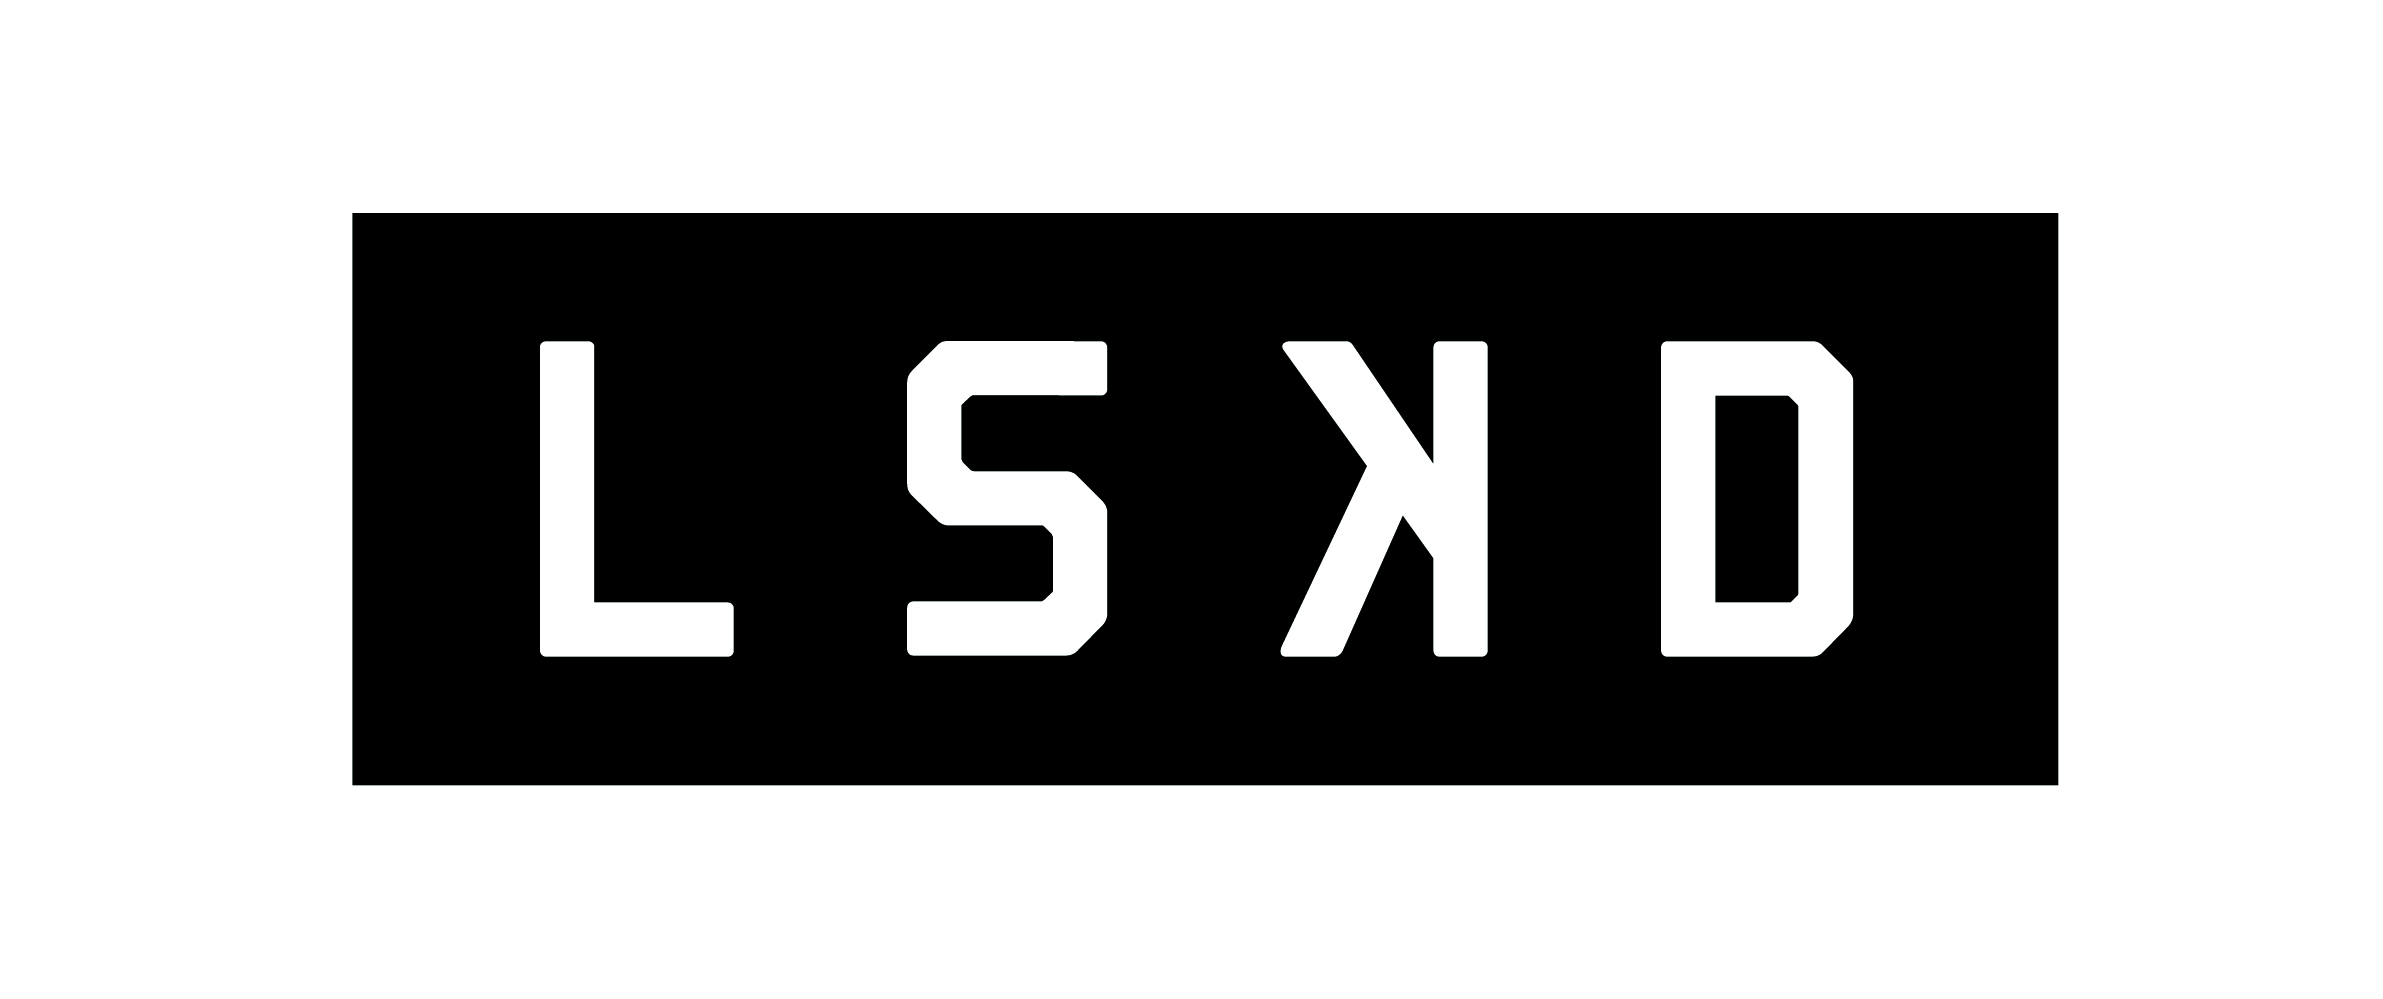 LSKD_4_Logos-01 (1).jpg